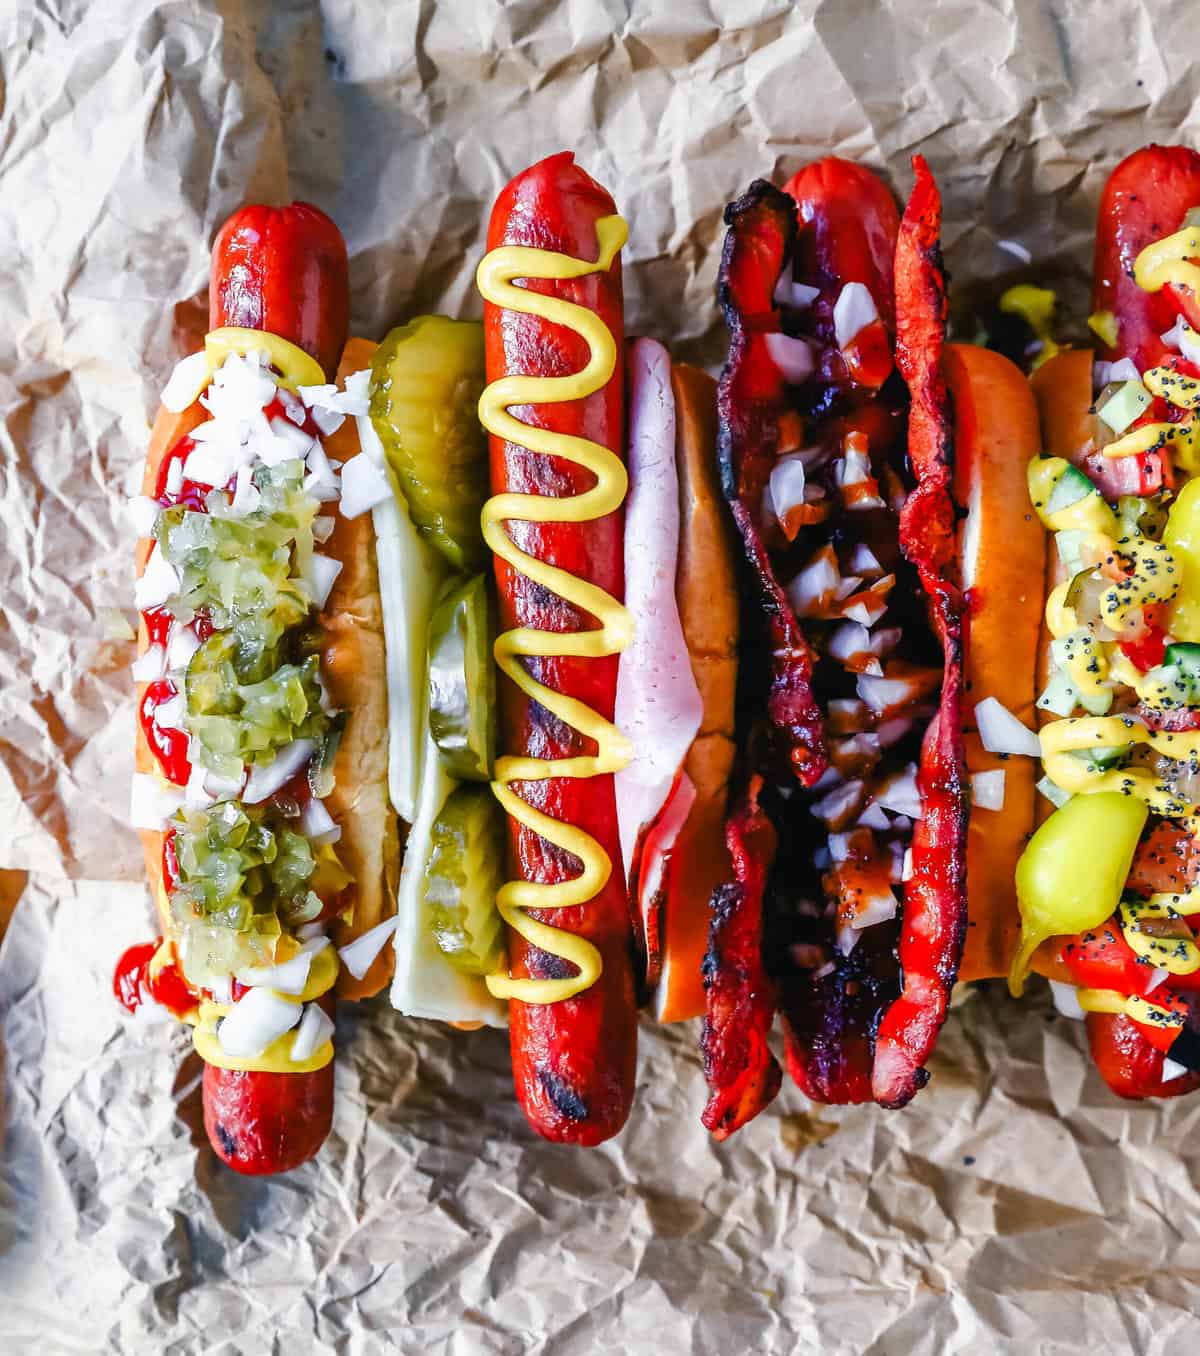 10 Best Gourmet Hot Dogs Recipes